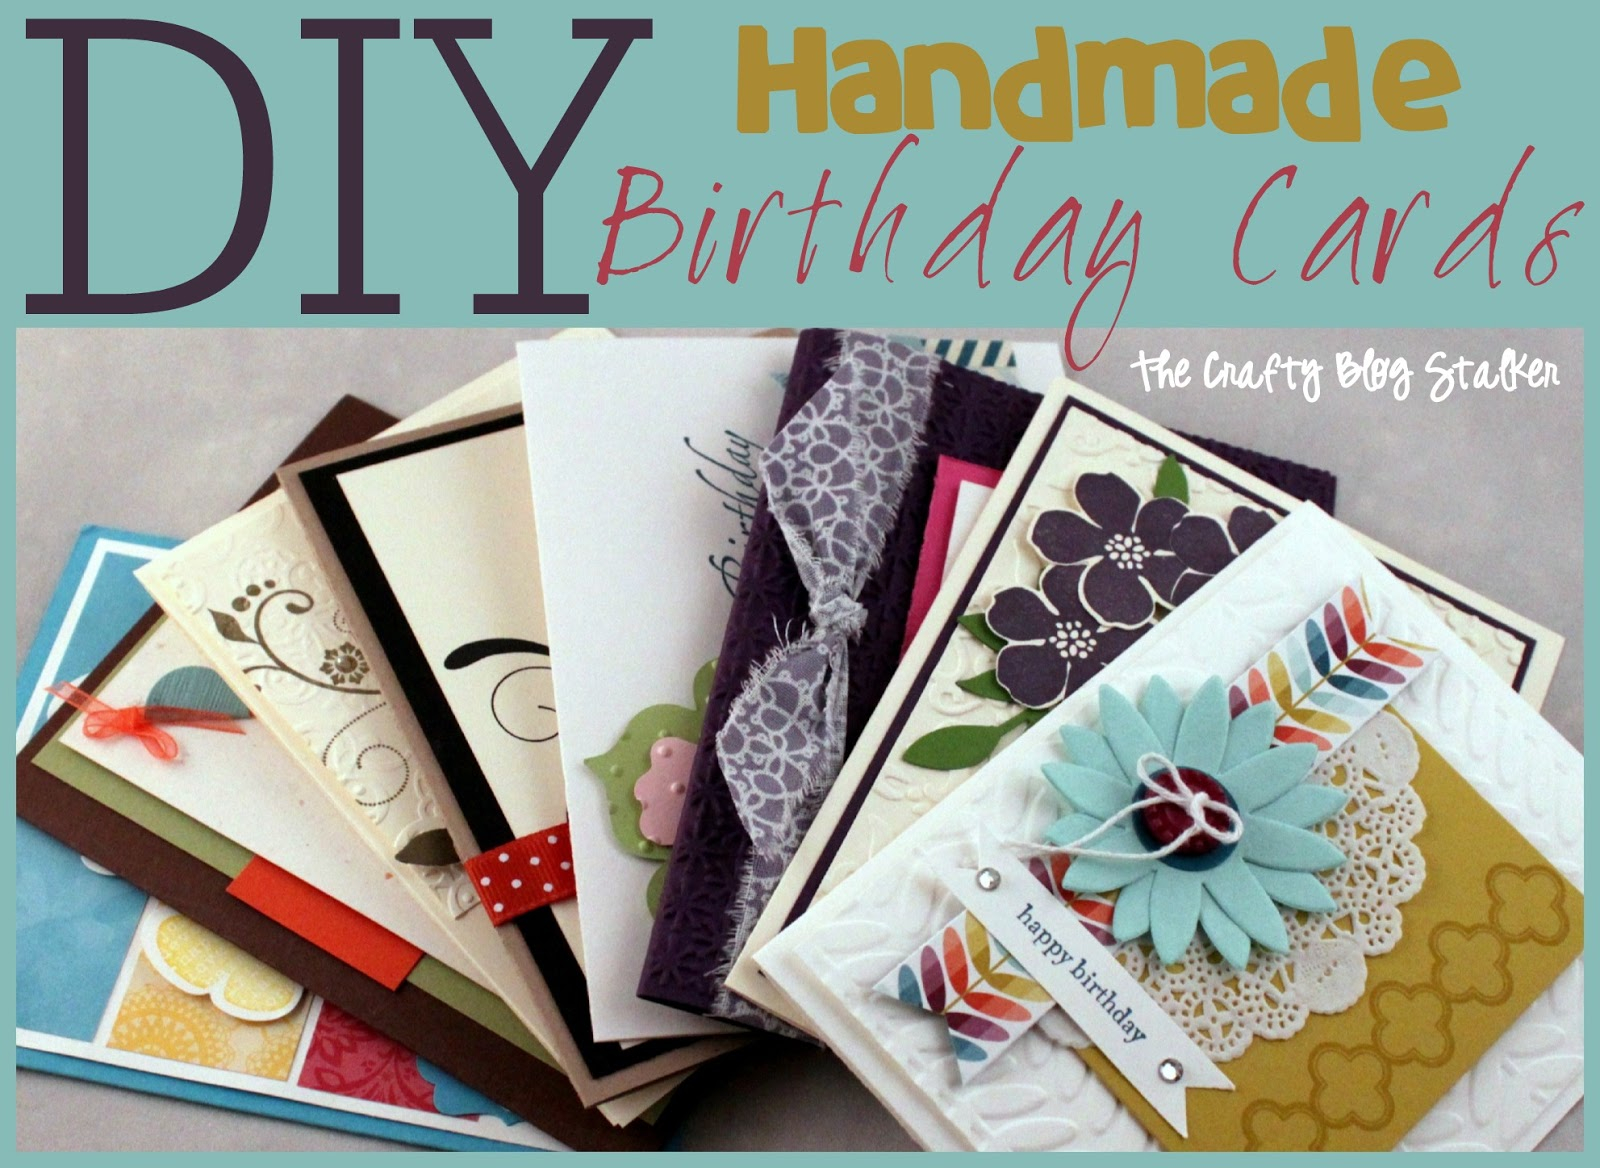 Easy Handmade Birthday Card Ideas Handmade Birthday Card Ideas The Crafty Blog Stalker